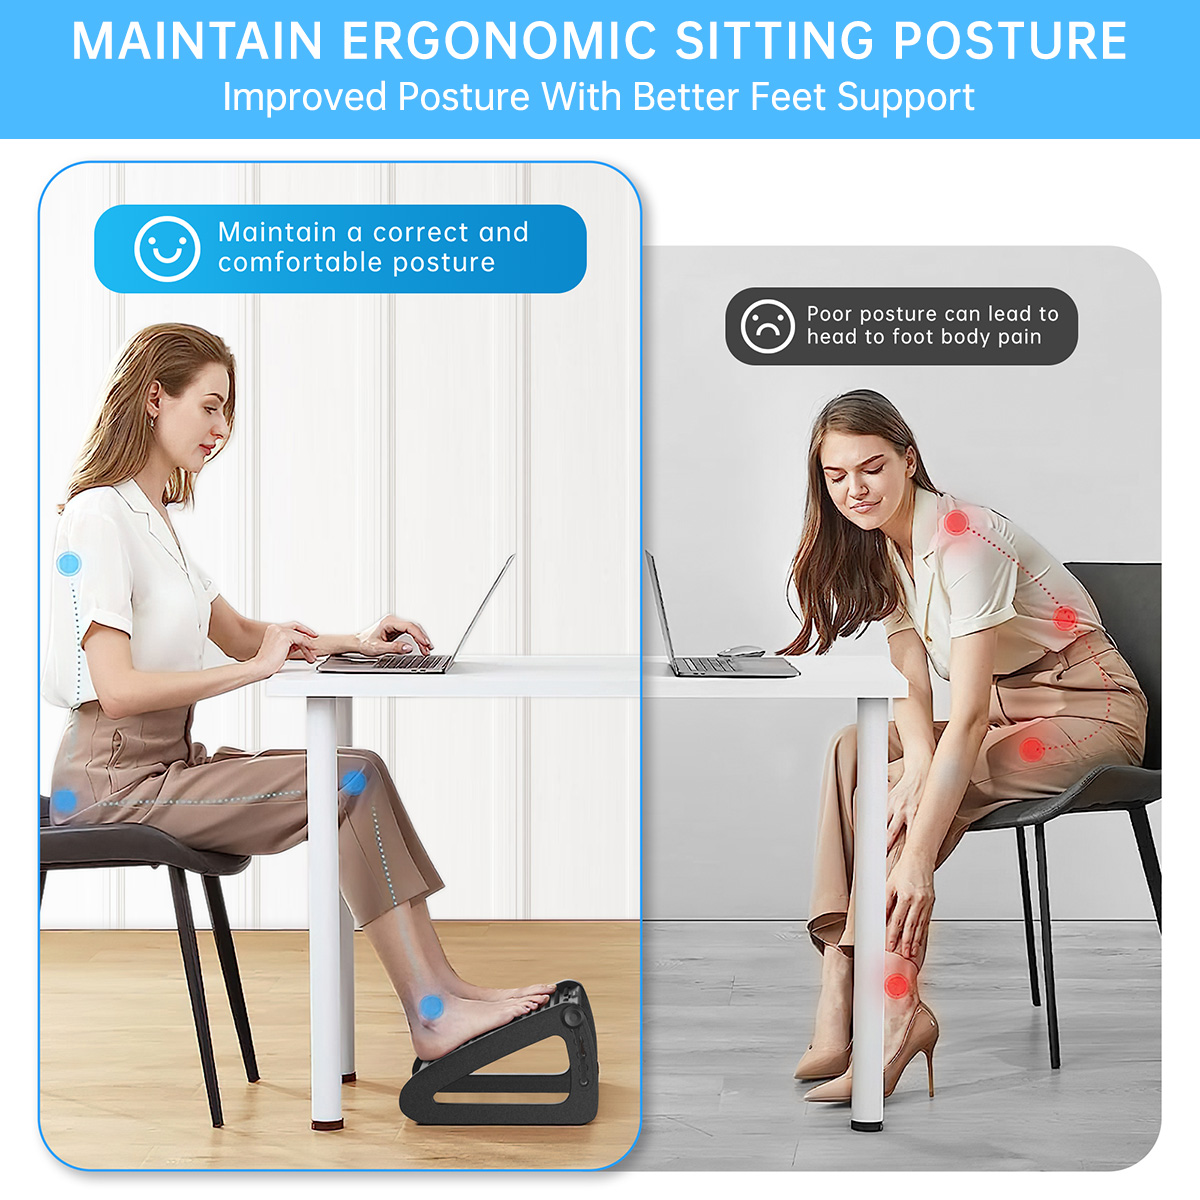 Foot Rests, Adjustable Under Desk Footrest with 6 Height Position&Massage Surface, Ergonomic Foot Stool Under Desk at Work for Improved Circulation and Posture,Home, Office(Black) - image 5 of 7